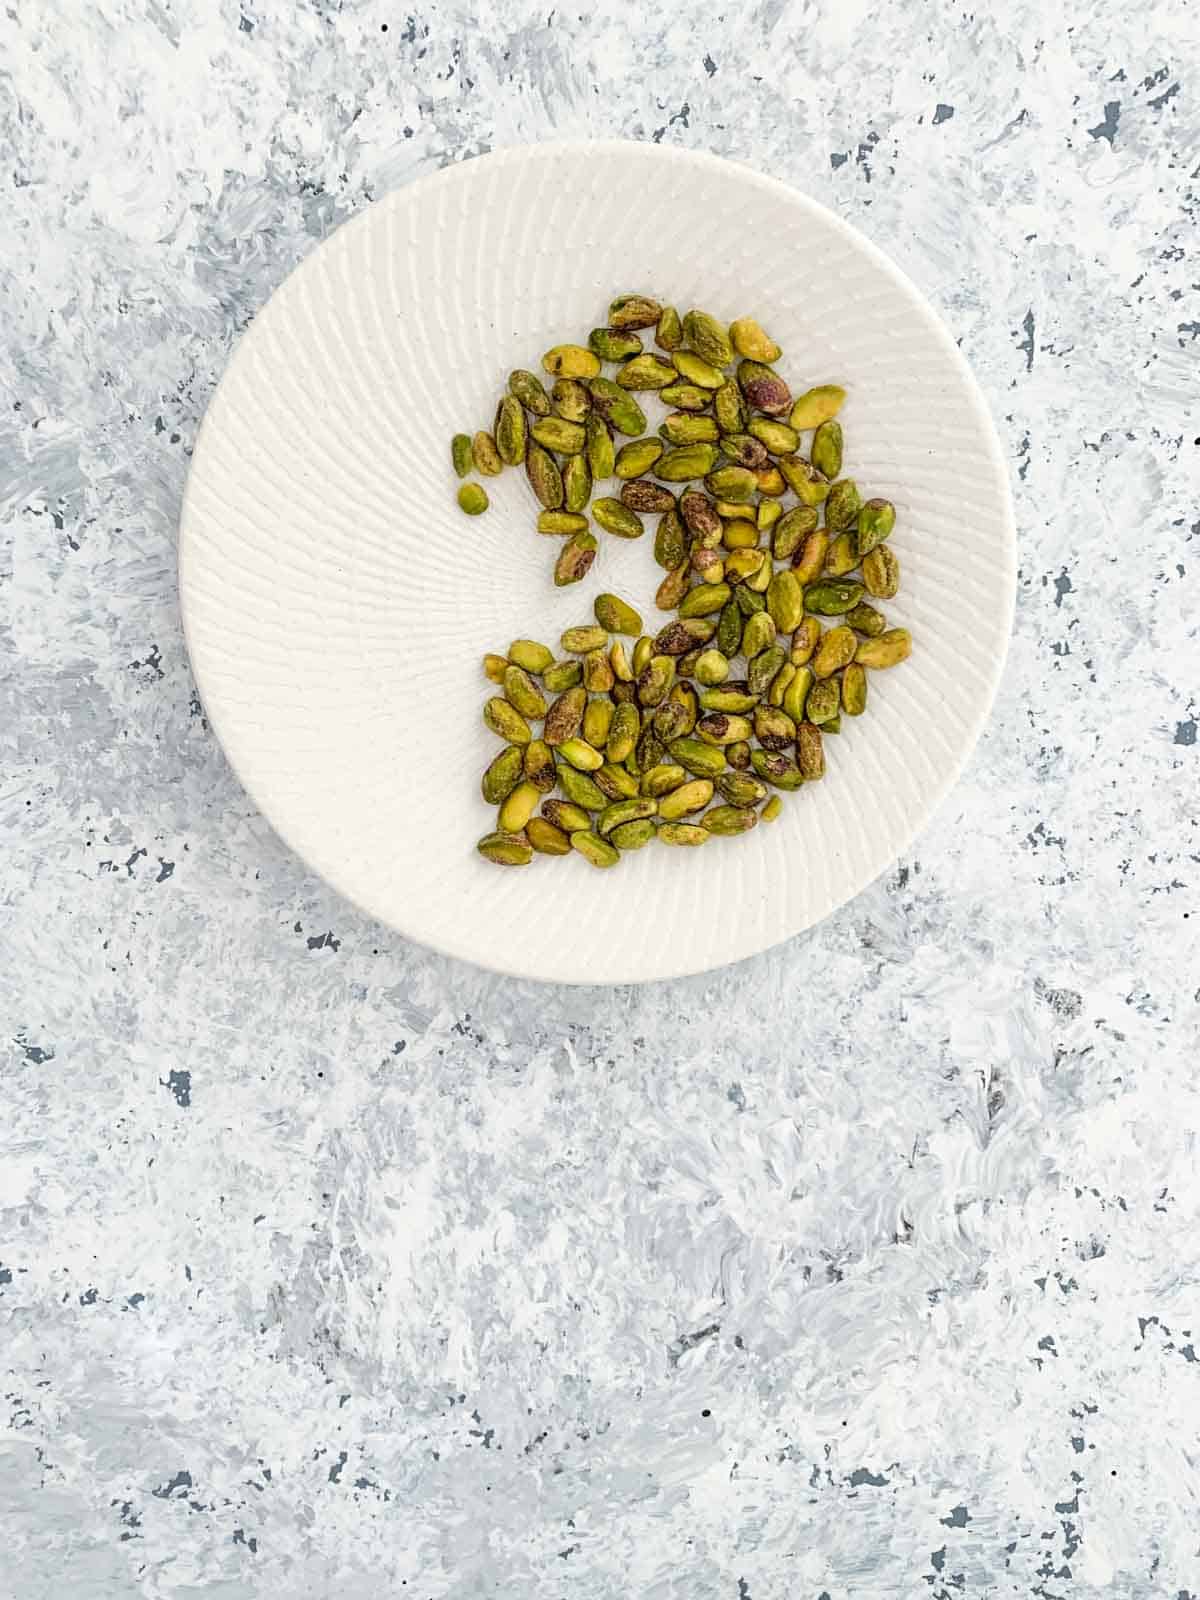 Pistachio kernels on a white plate